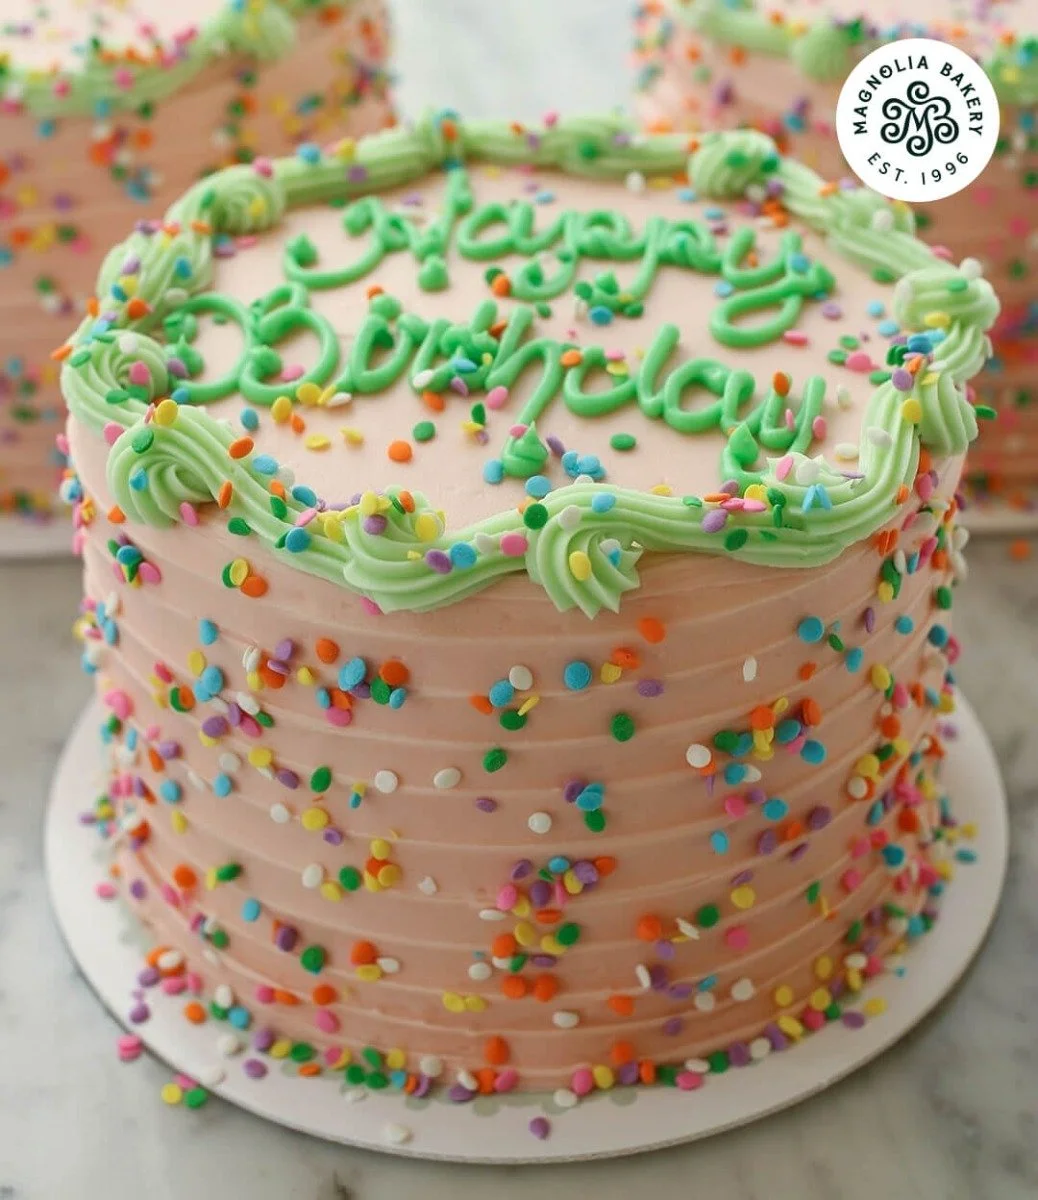 Birthday Cake by Magnolia Bakery 